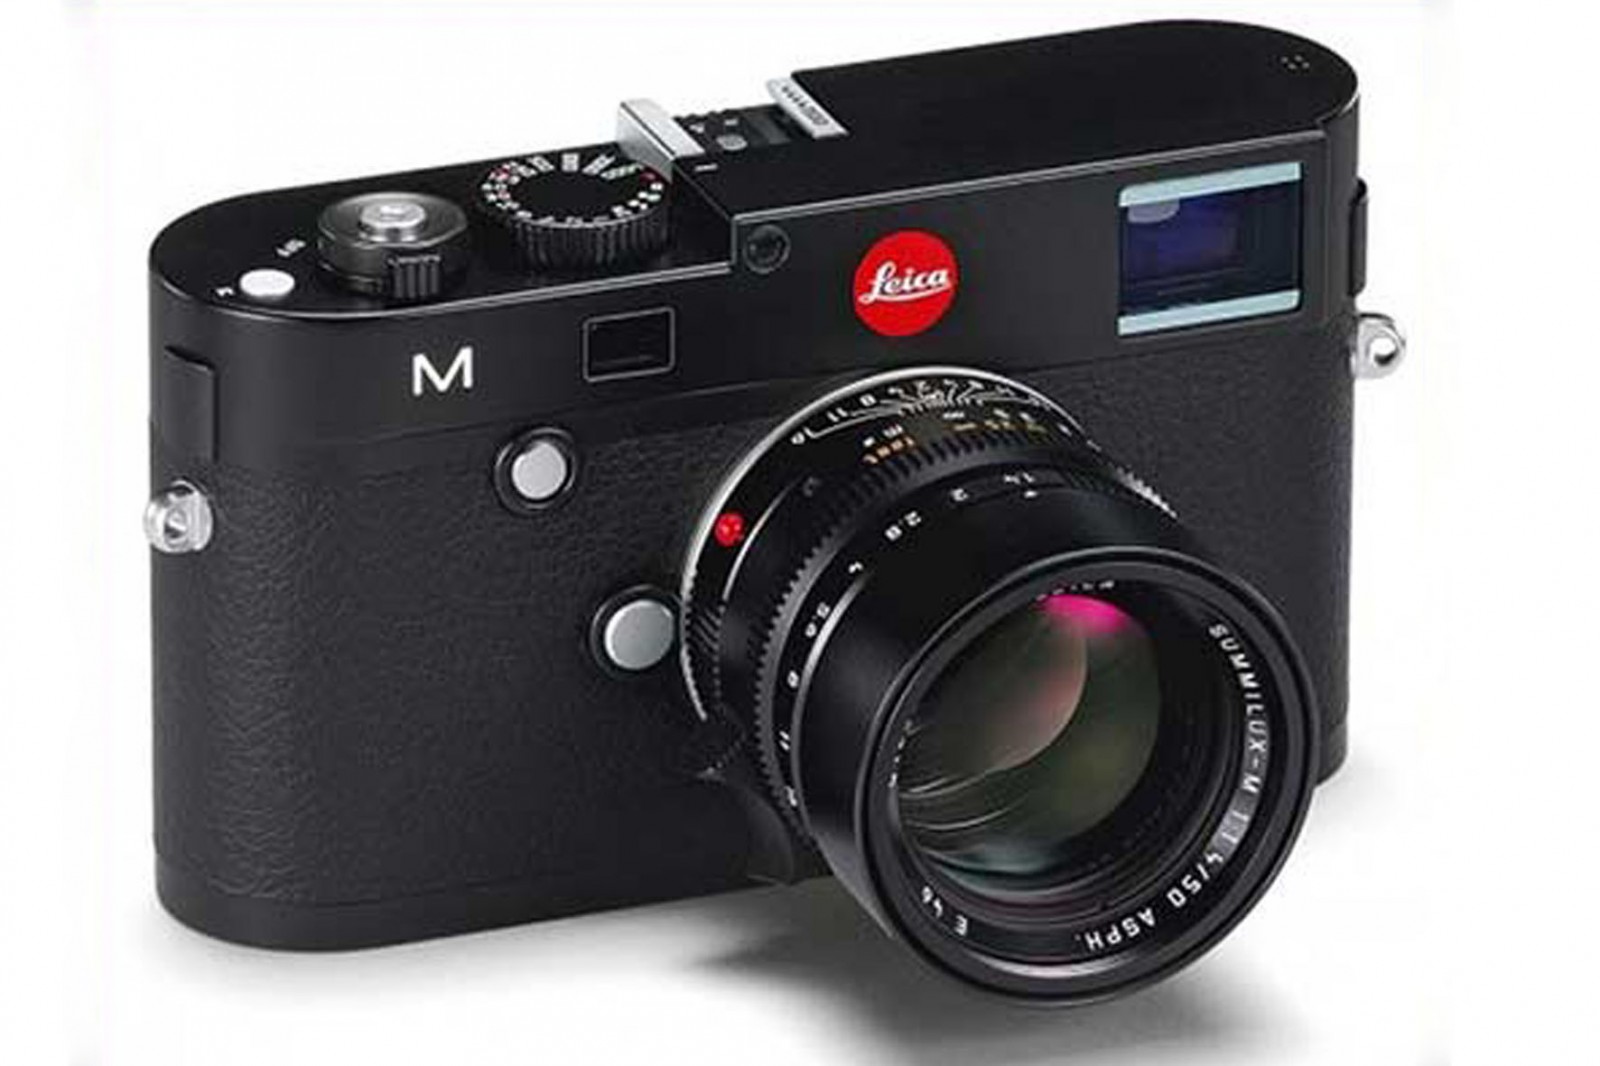 Leica M System